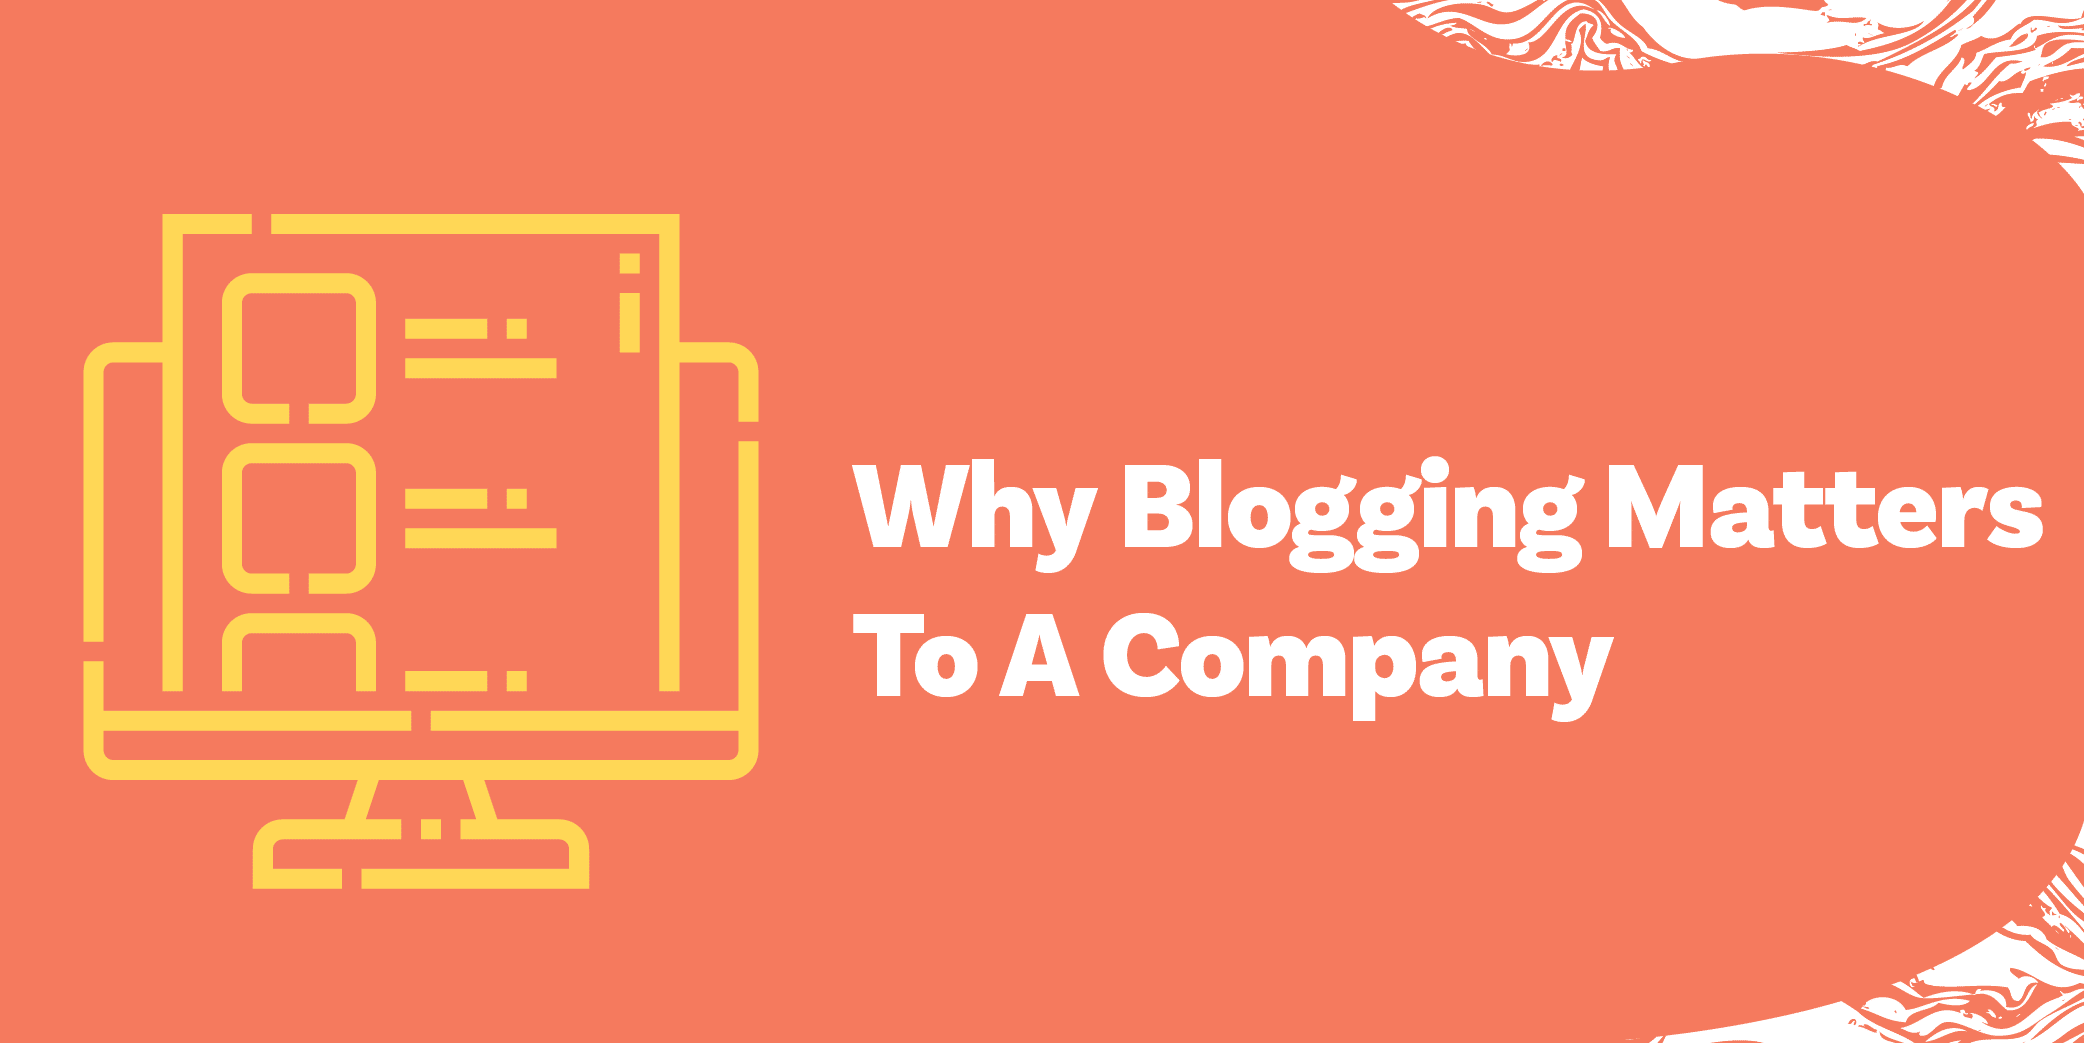 Blogging Matters